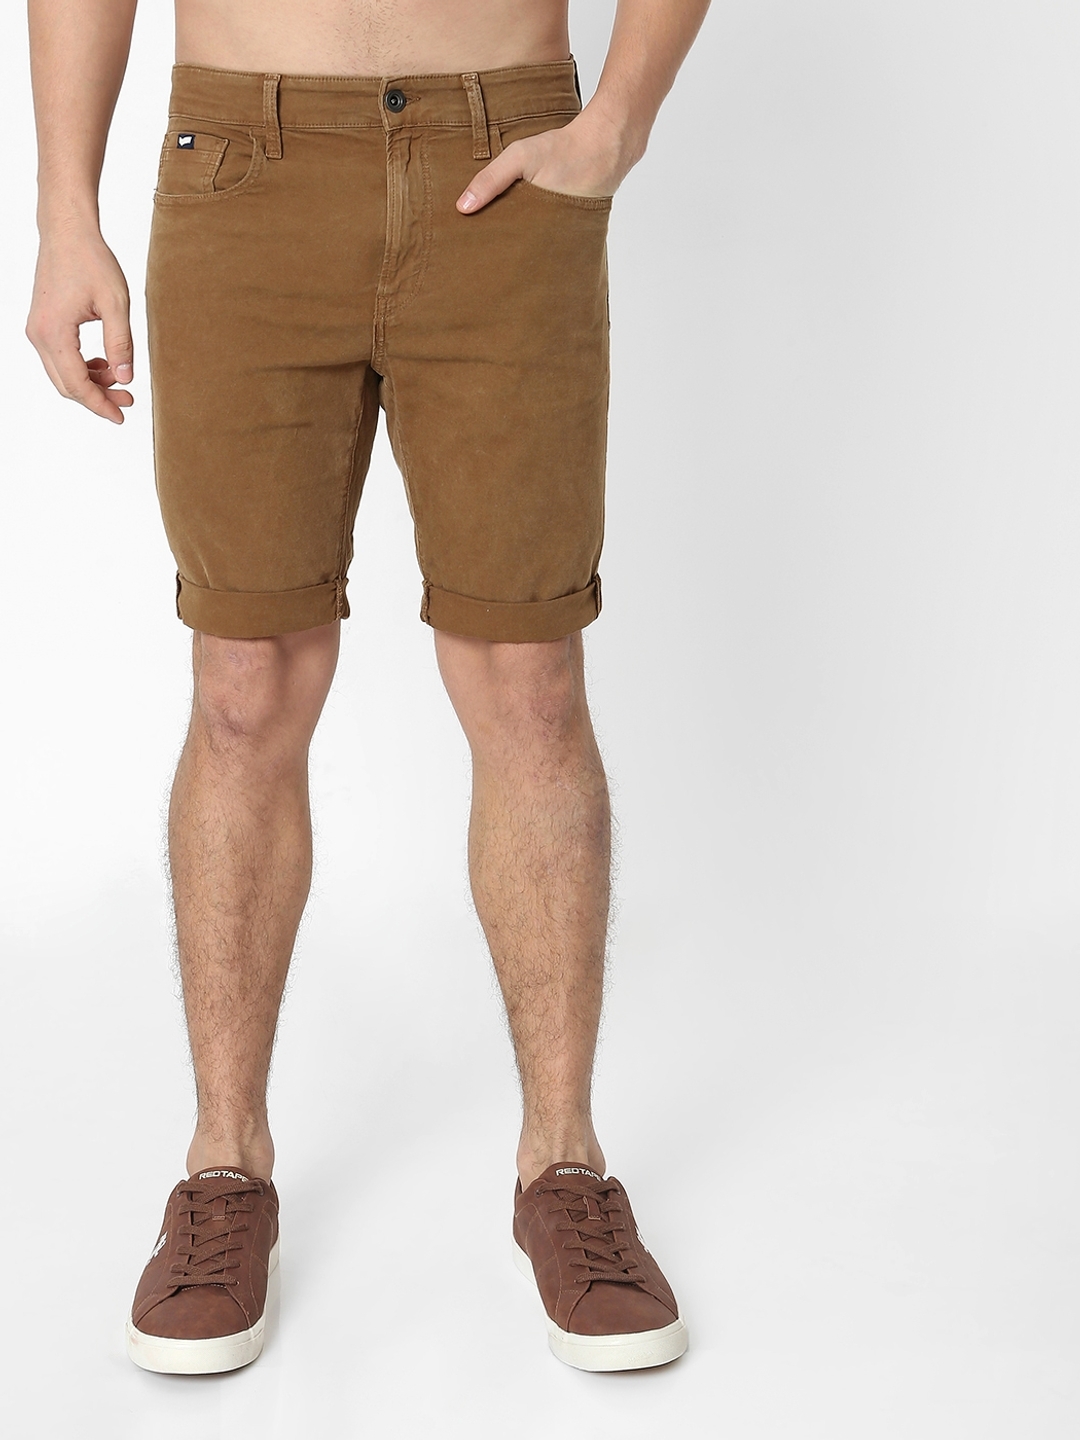 Bermuda shorts - Casual smart shorts for men - THE NINES